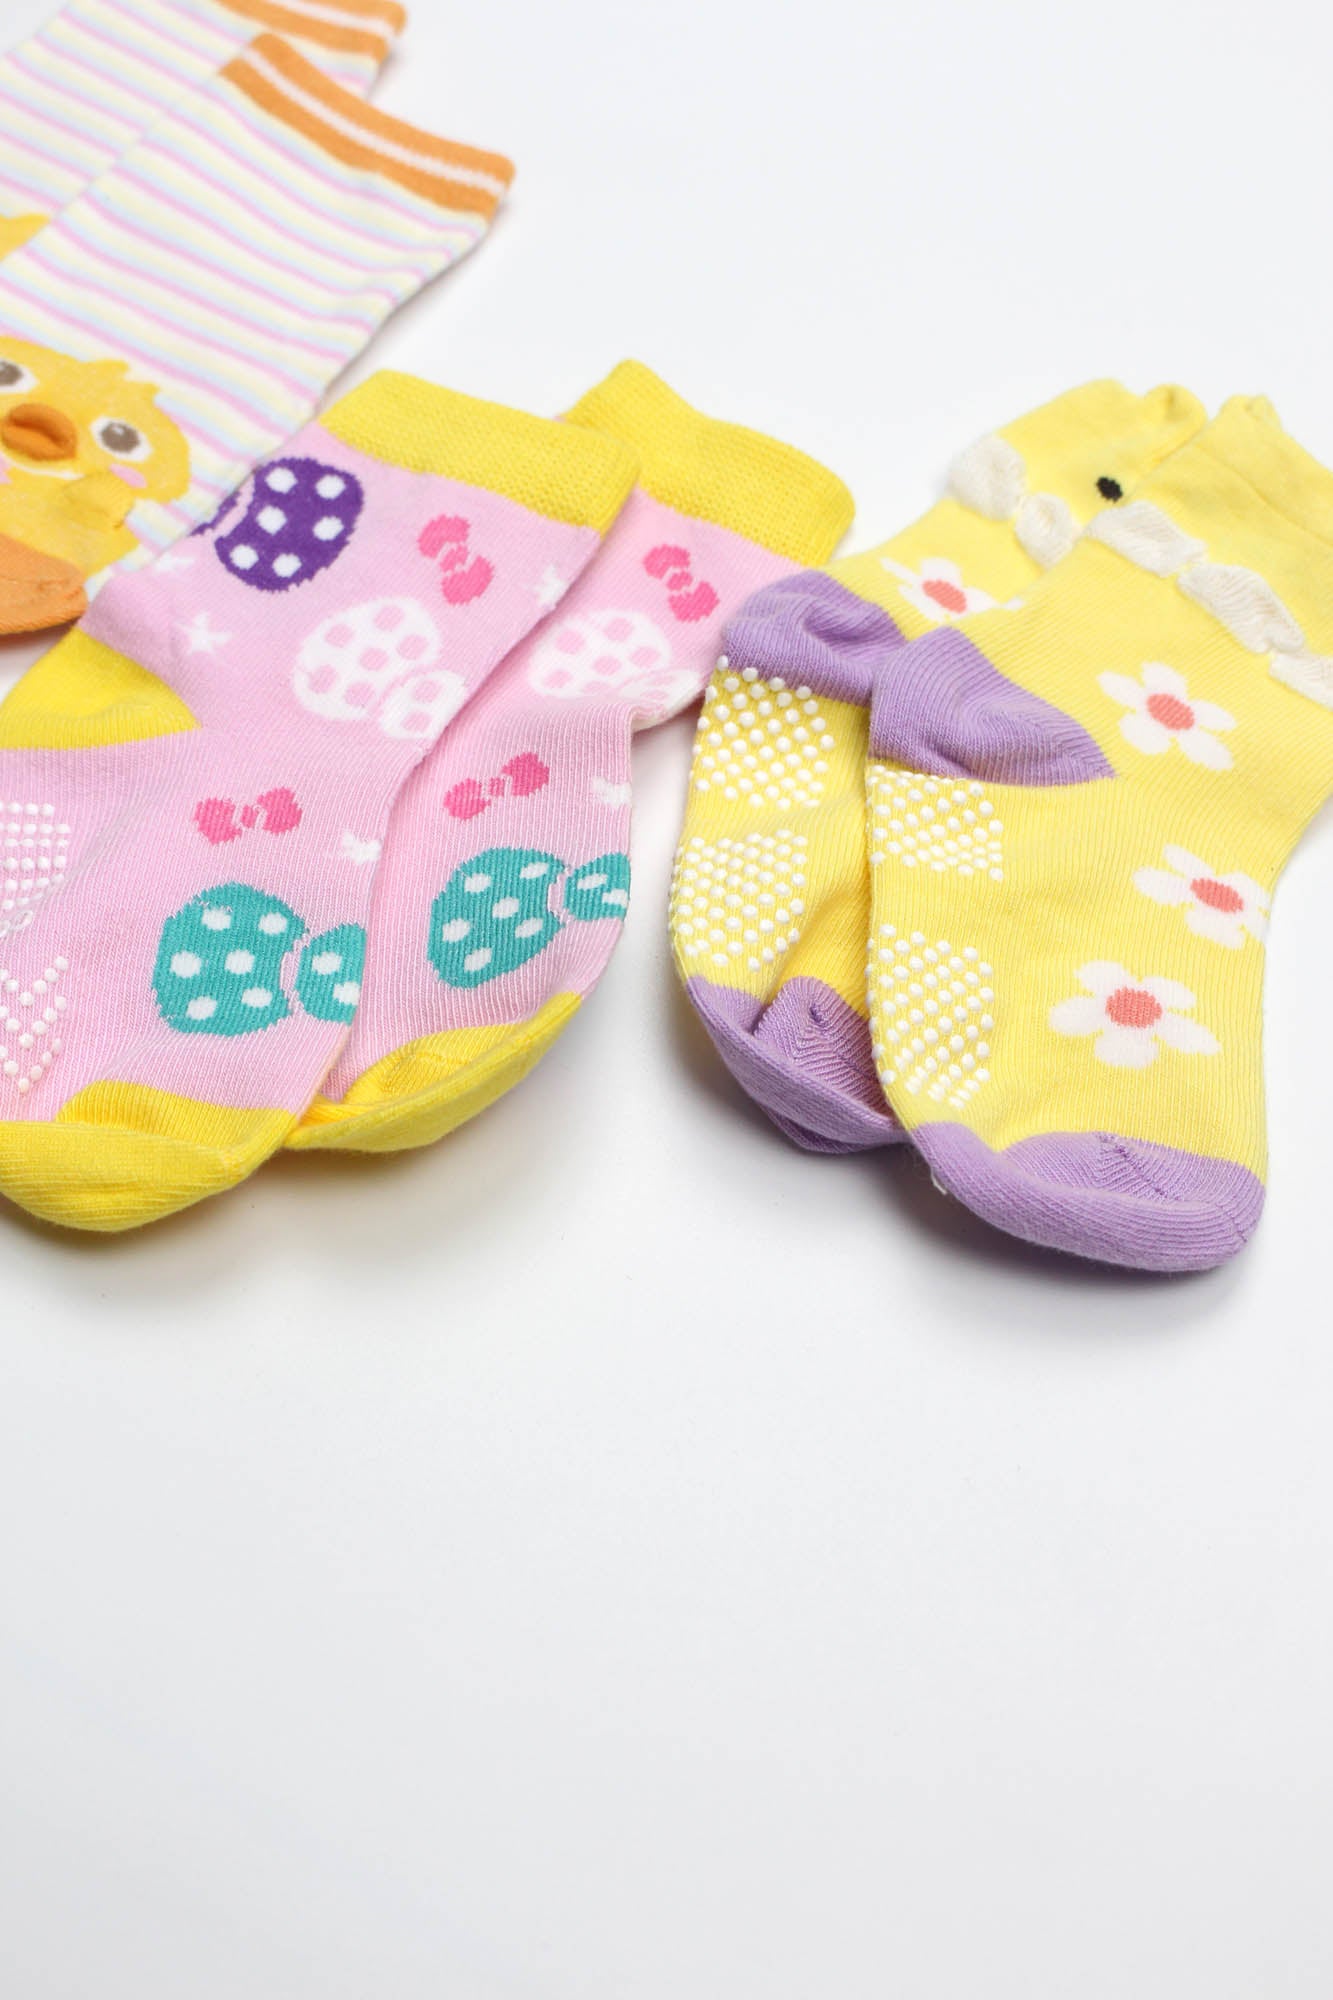 4-pairs of Sock